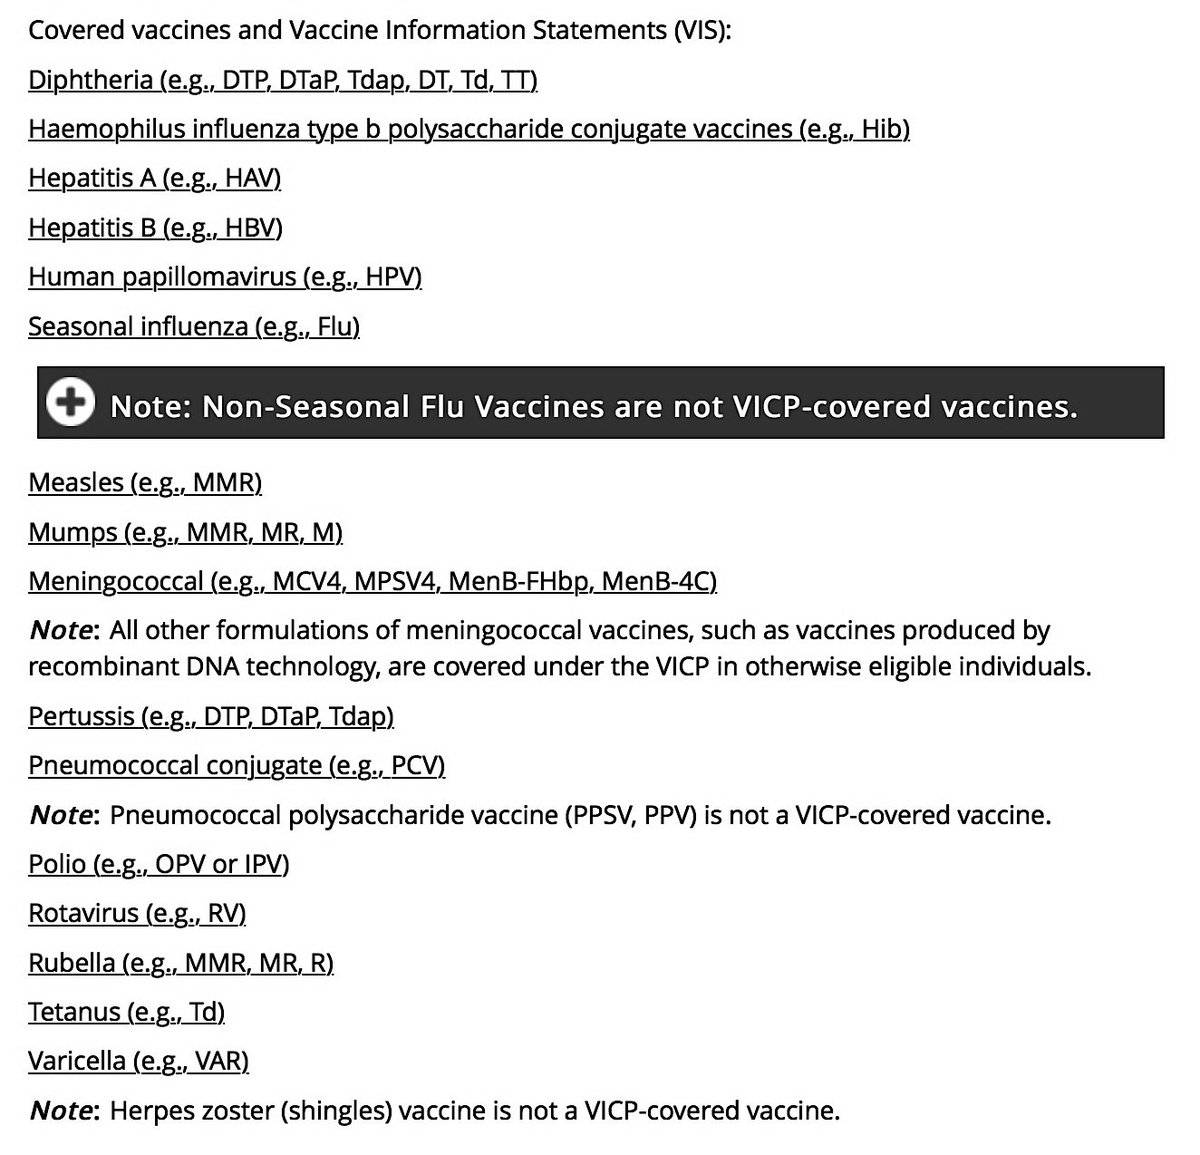 National Vaccine Injury Compensation Program. Covered Vaccines.September, 2018 https://www.hrsa.gov/vaccine-compensation/covered-vaccines/index.htmlComplete Vaccine Injury Table PDF. https://www.hrsa.gov/sites/default/files/hrsa/vaccine-compensation/vaccine-injury-table.pdf #QAnon  #Vaccine  #Autism  @potus